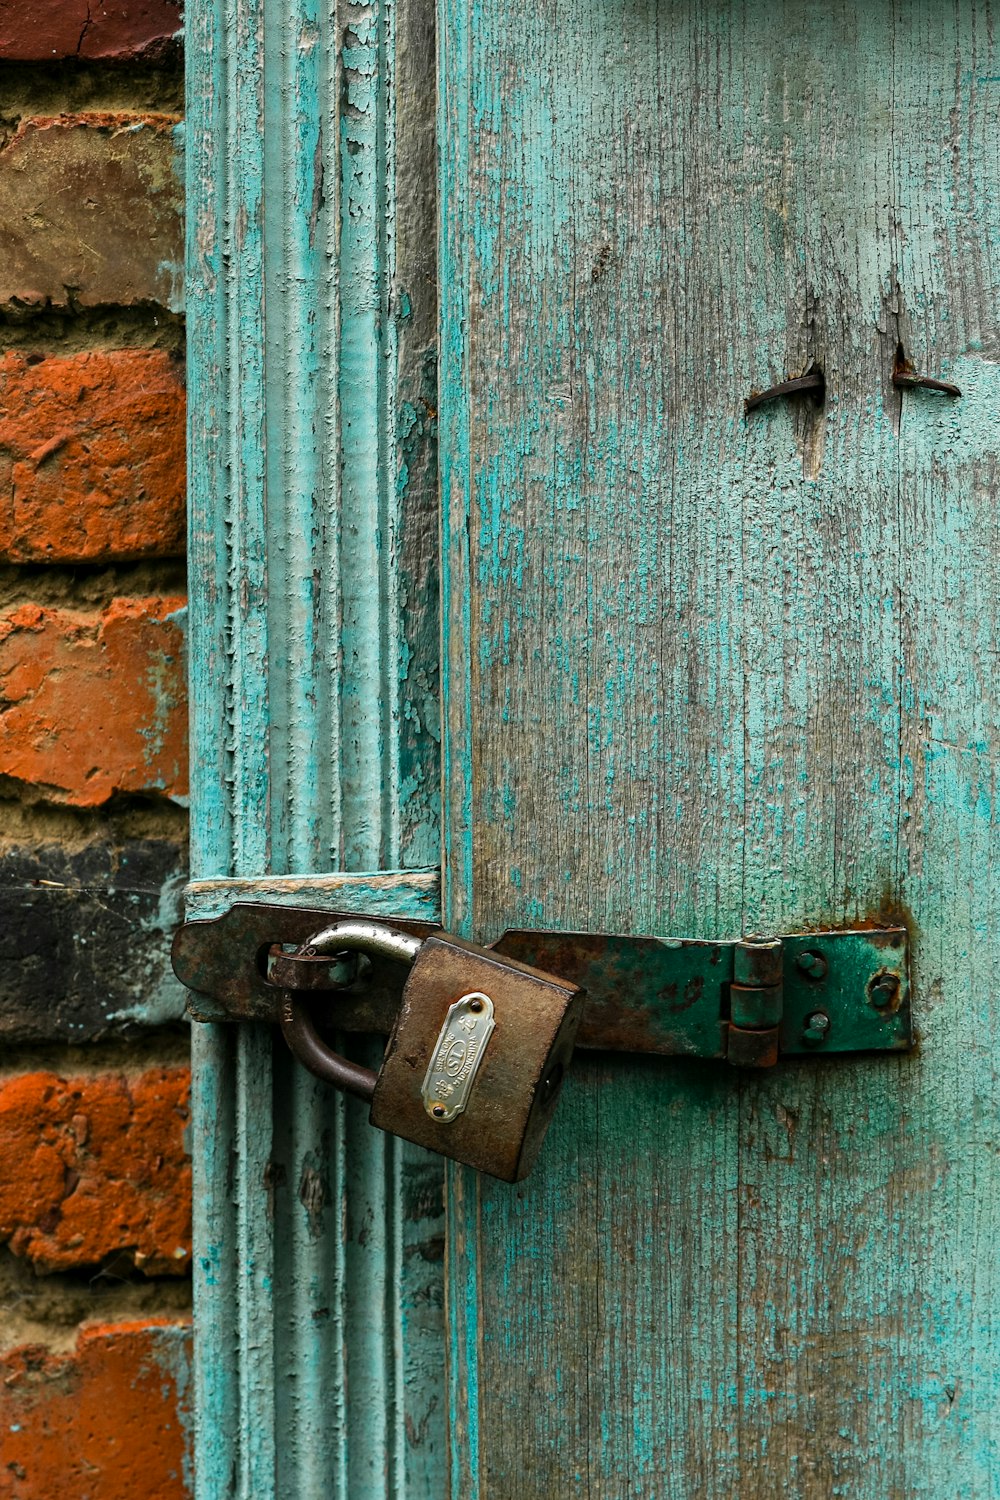 a door with a lock